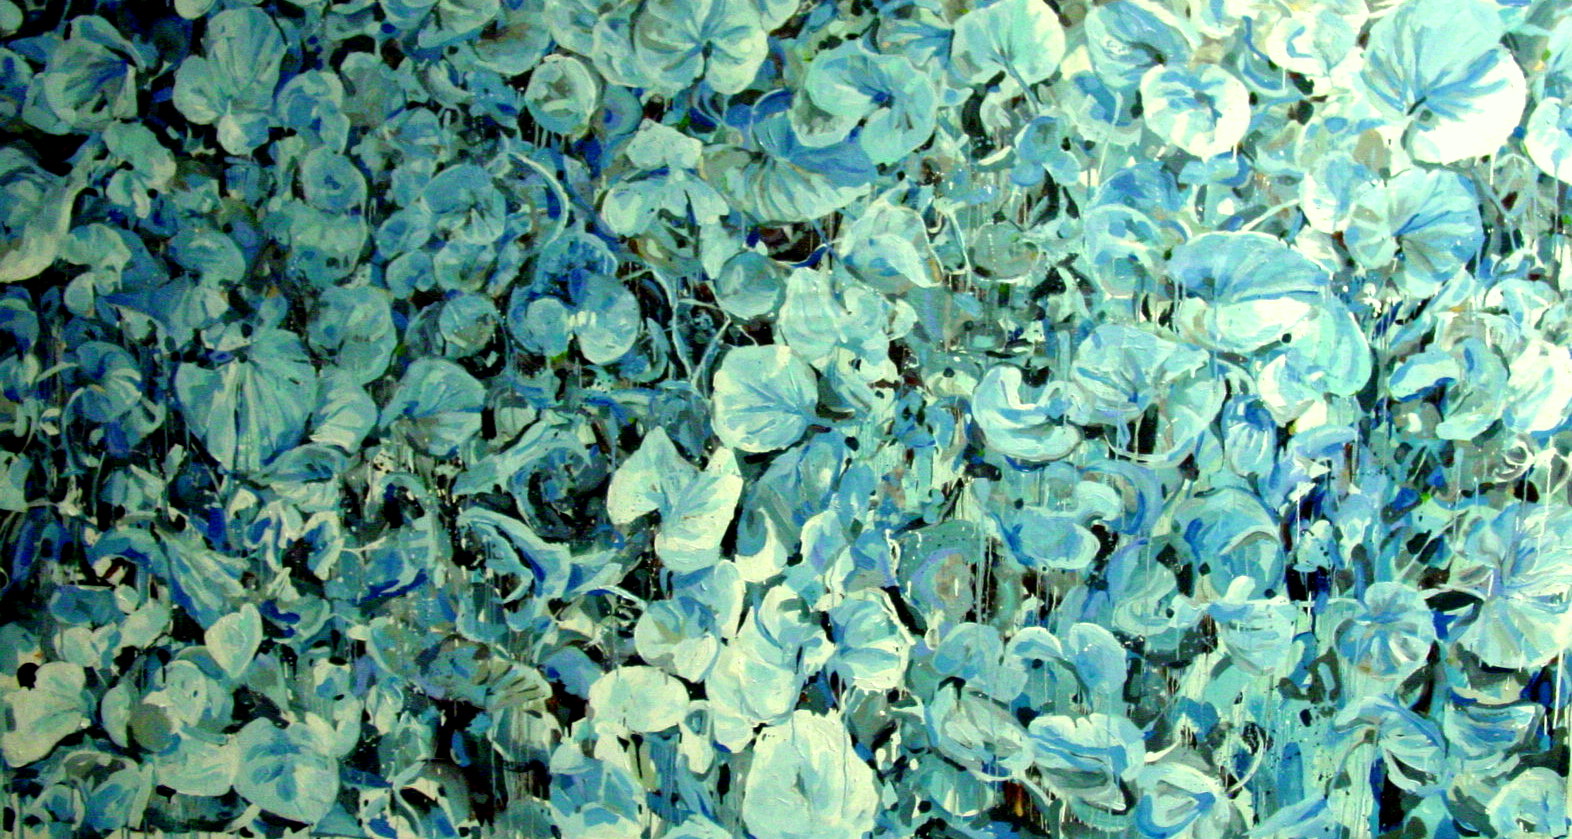 Blue Leaves oil on canvas Jessica Siemens 2009